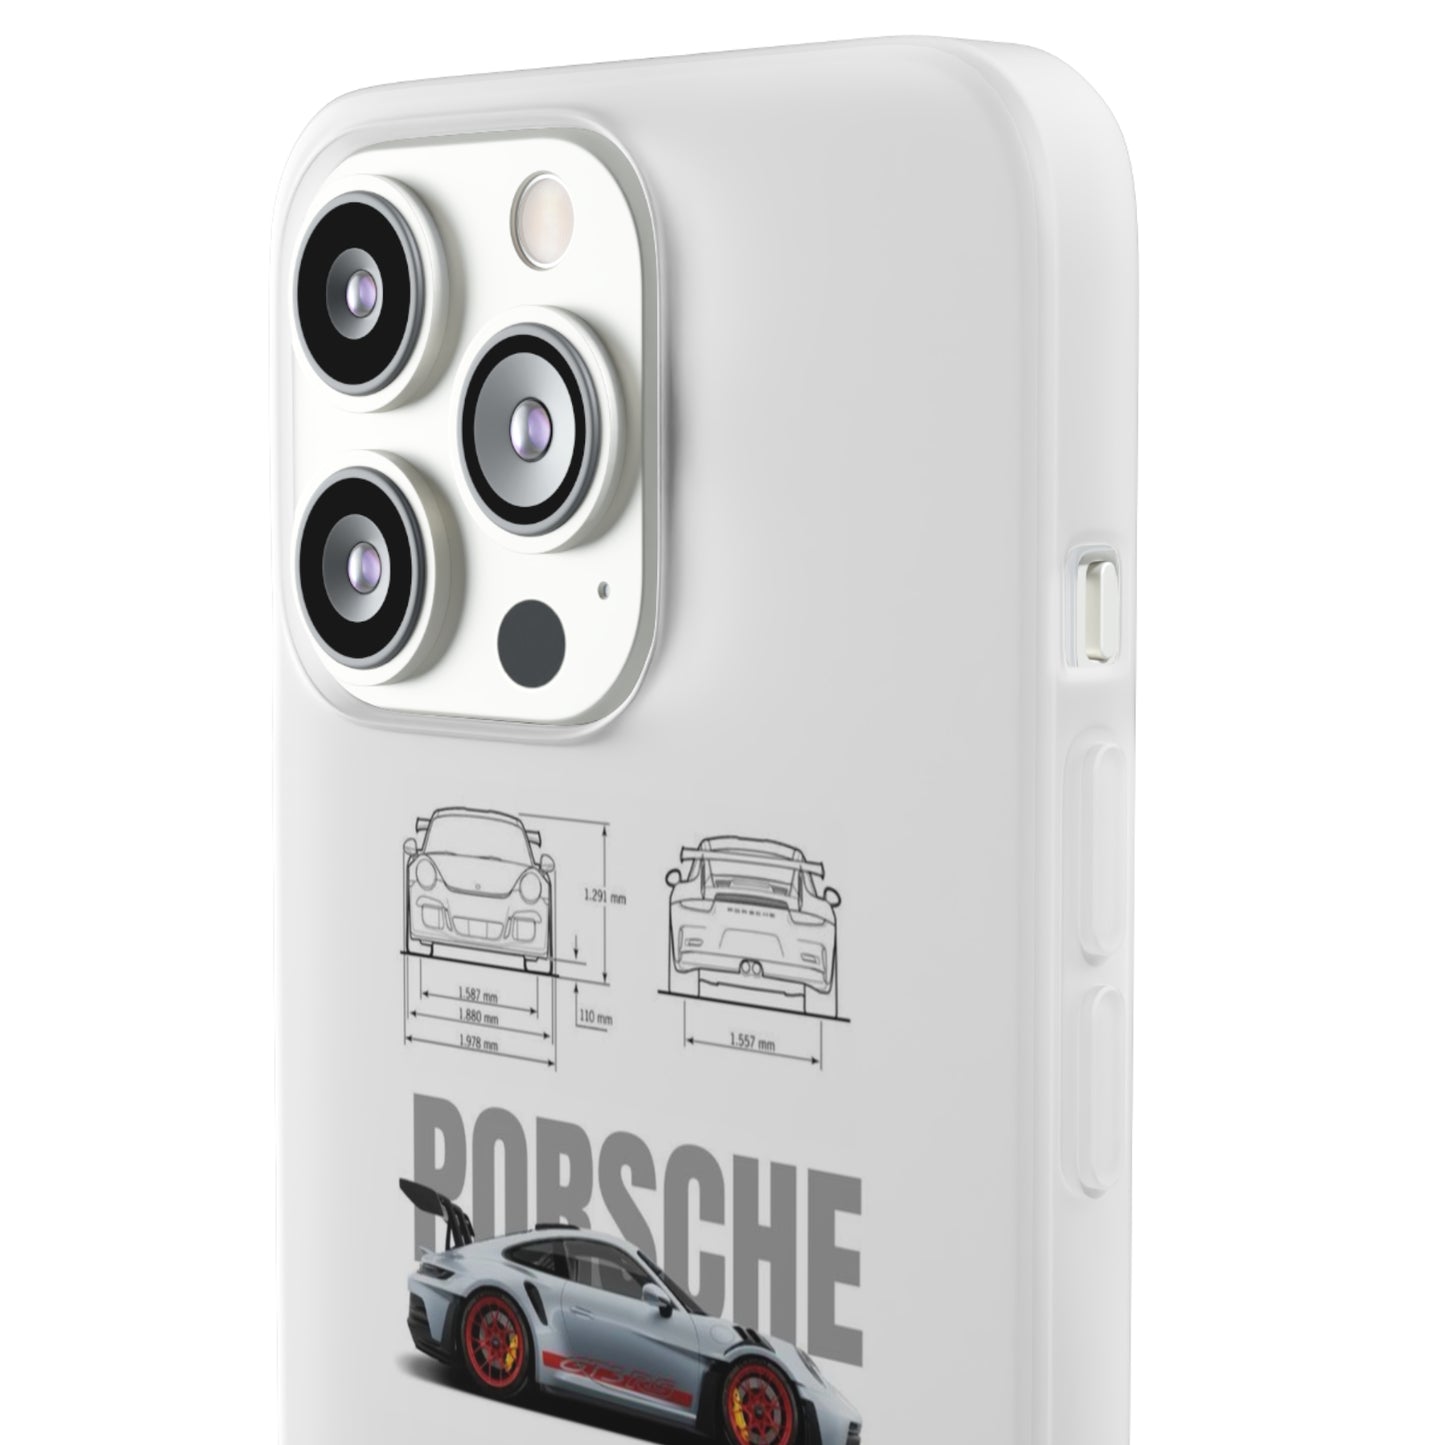 Blue Porsche Phone Case